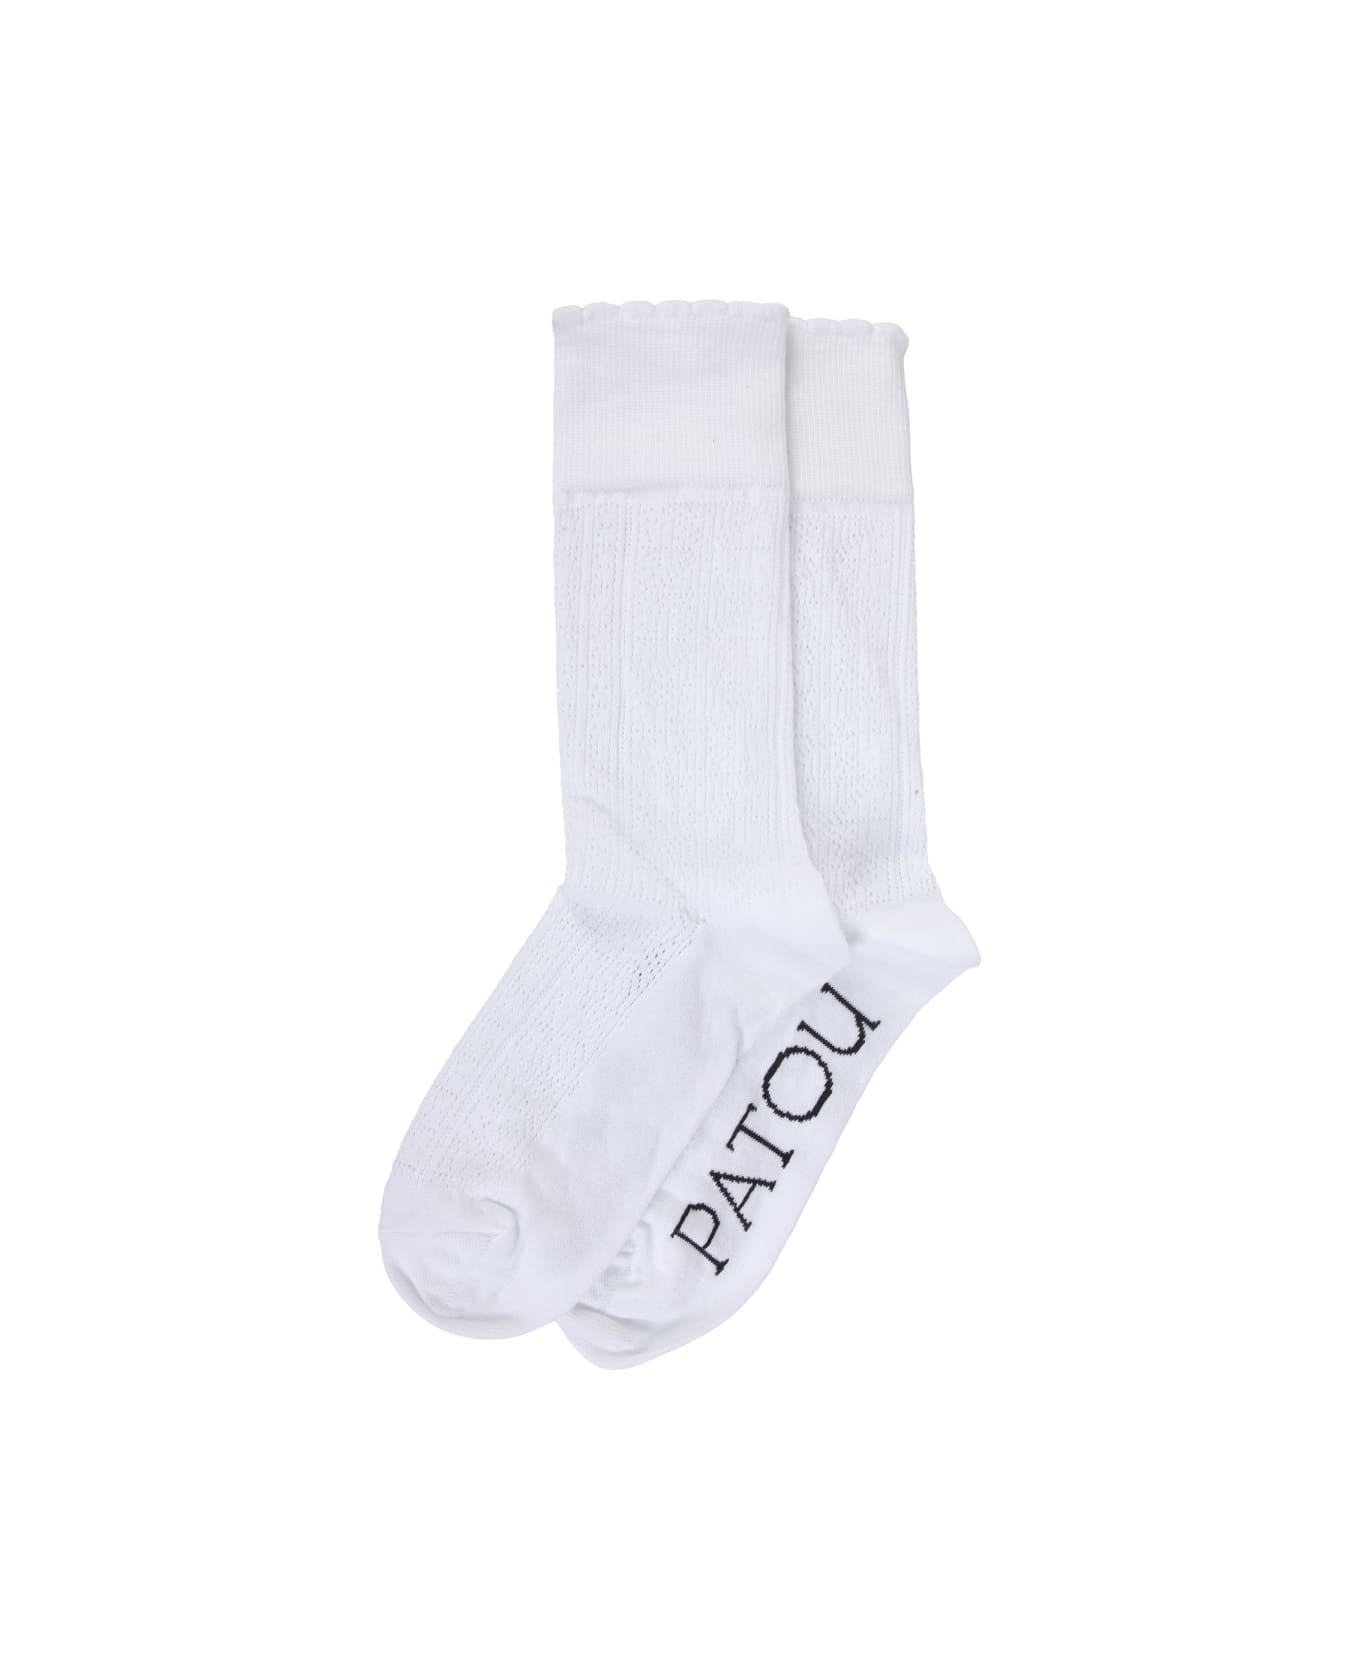 Patou Perforated Socks - WHITE